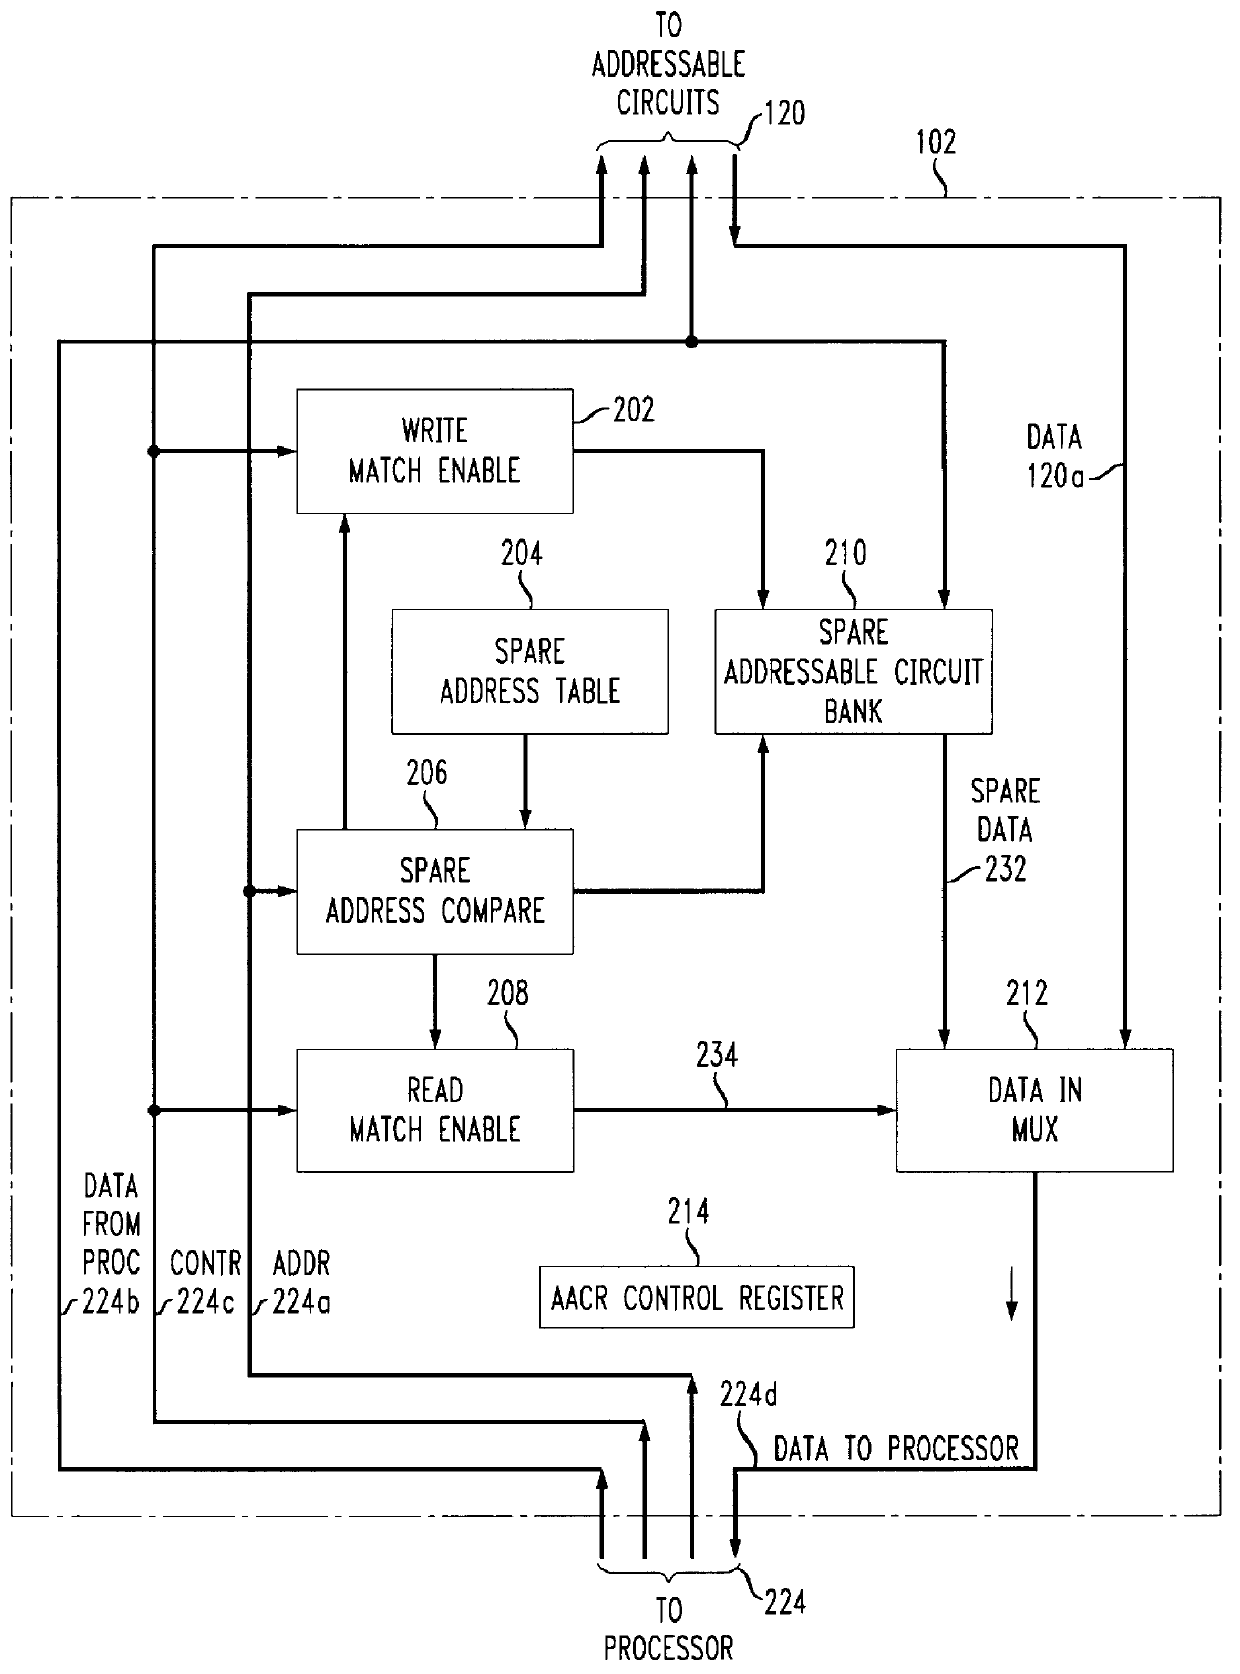 Adaptive addressable circuit redundancy method and apparatus